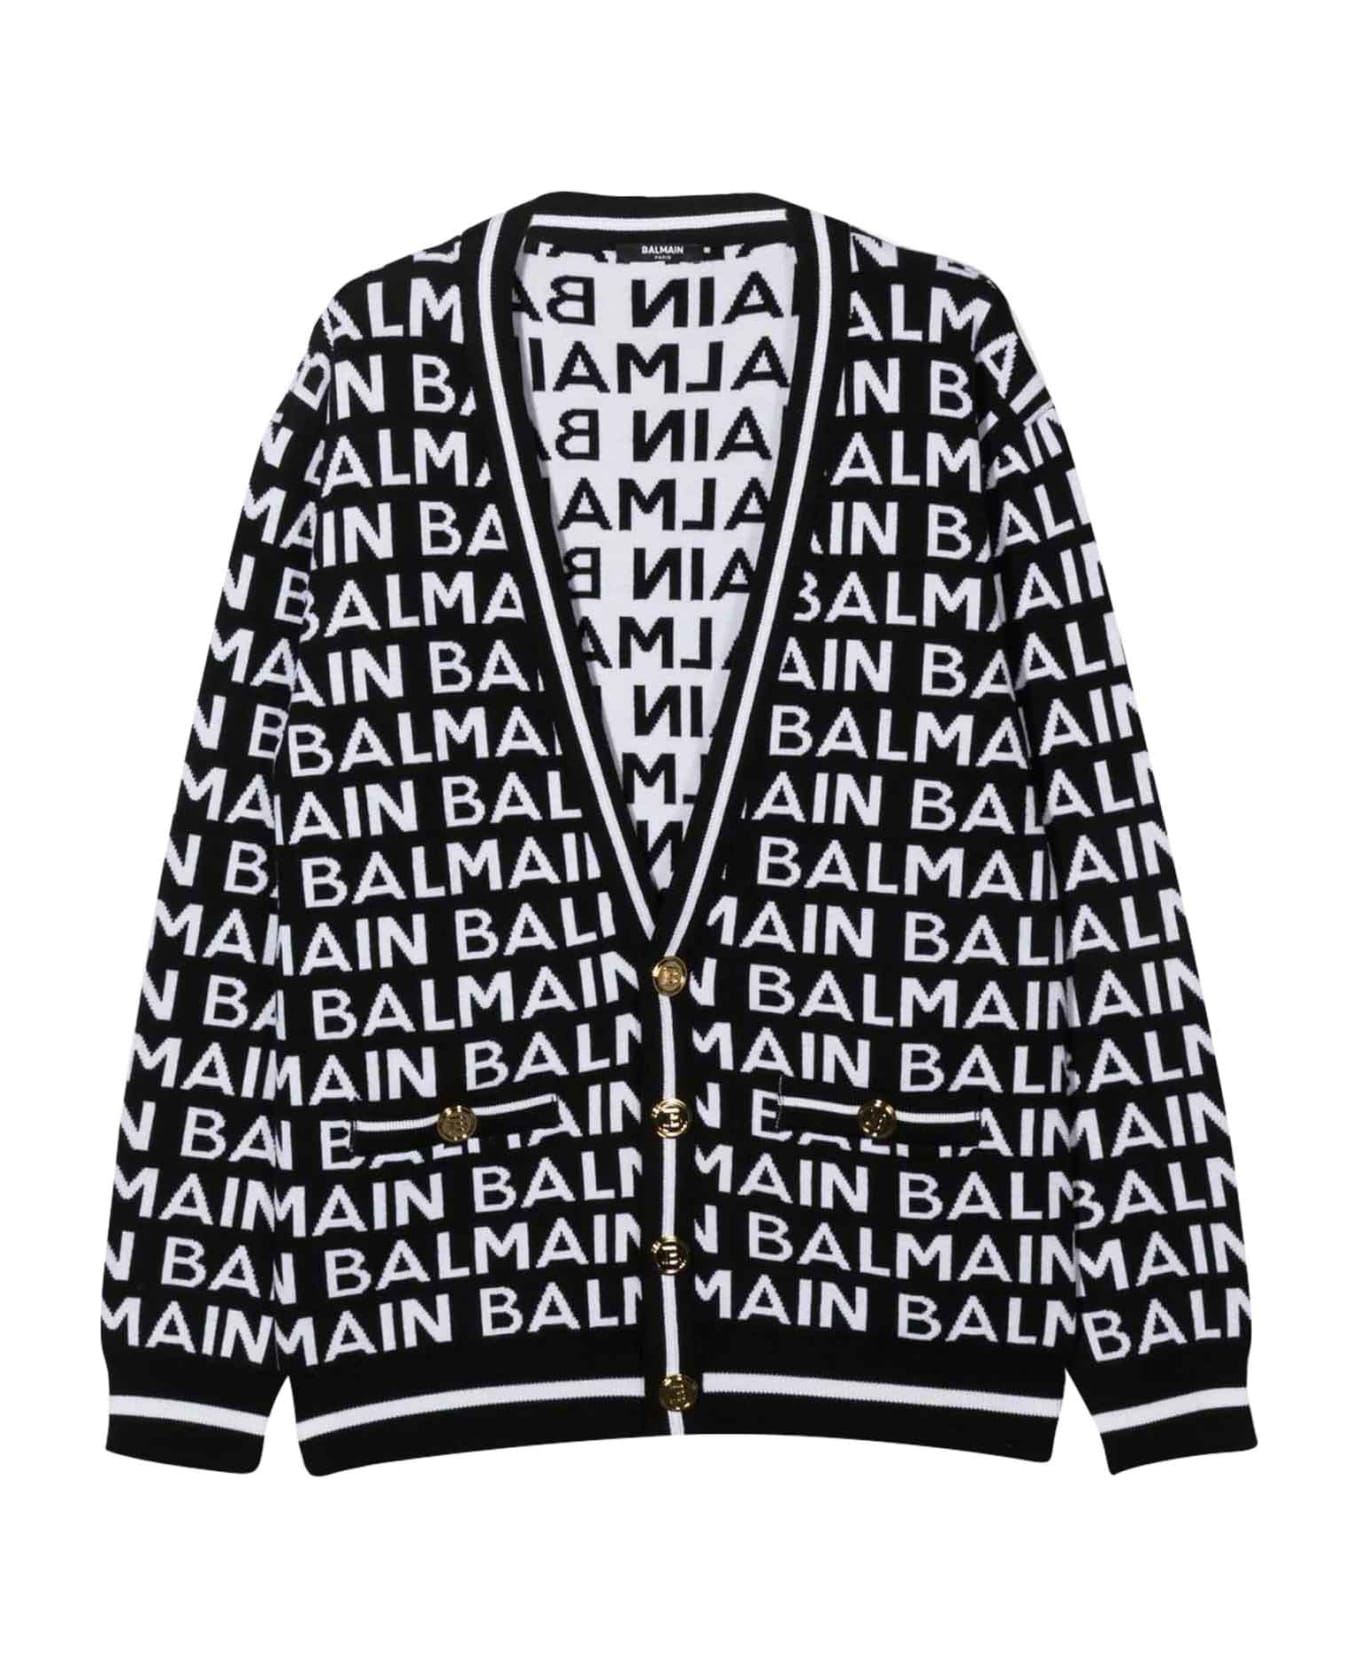 Balmain Black Sweater Unisex - Bc